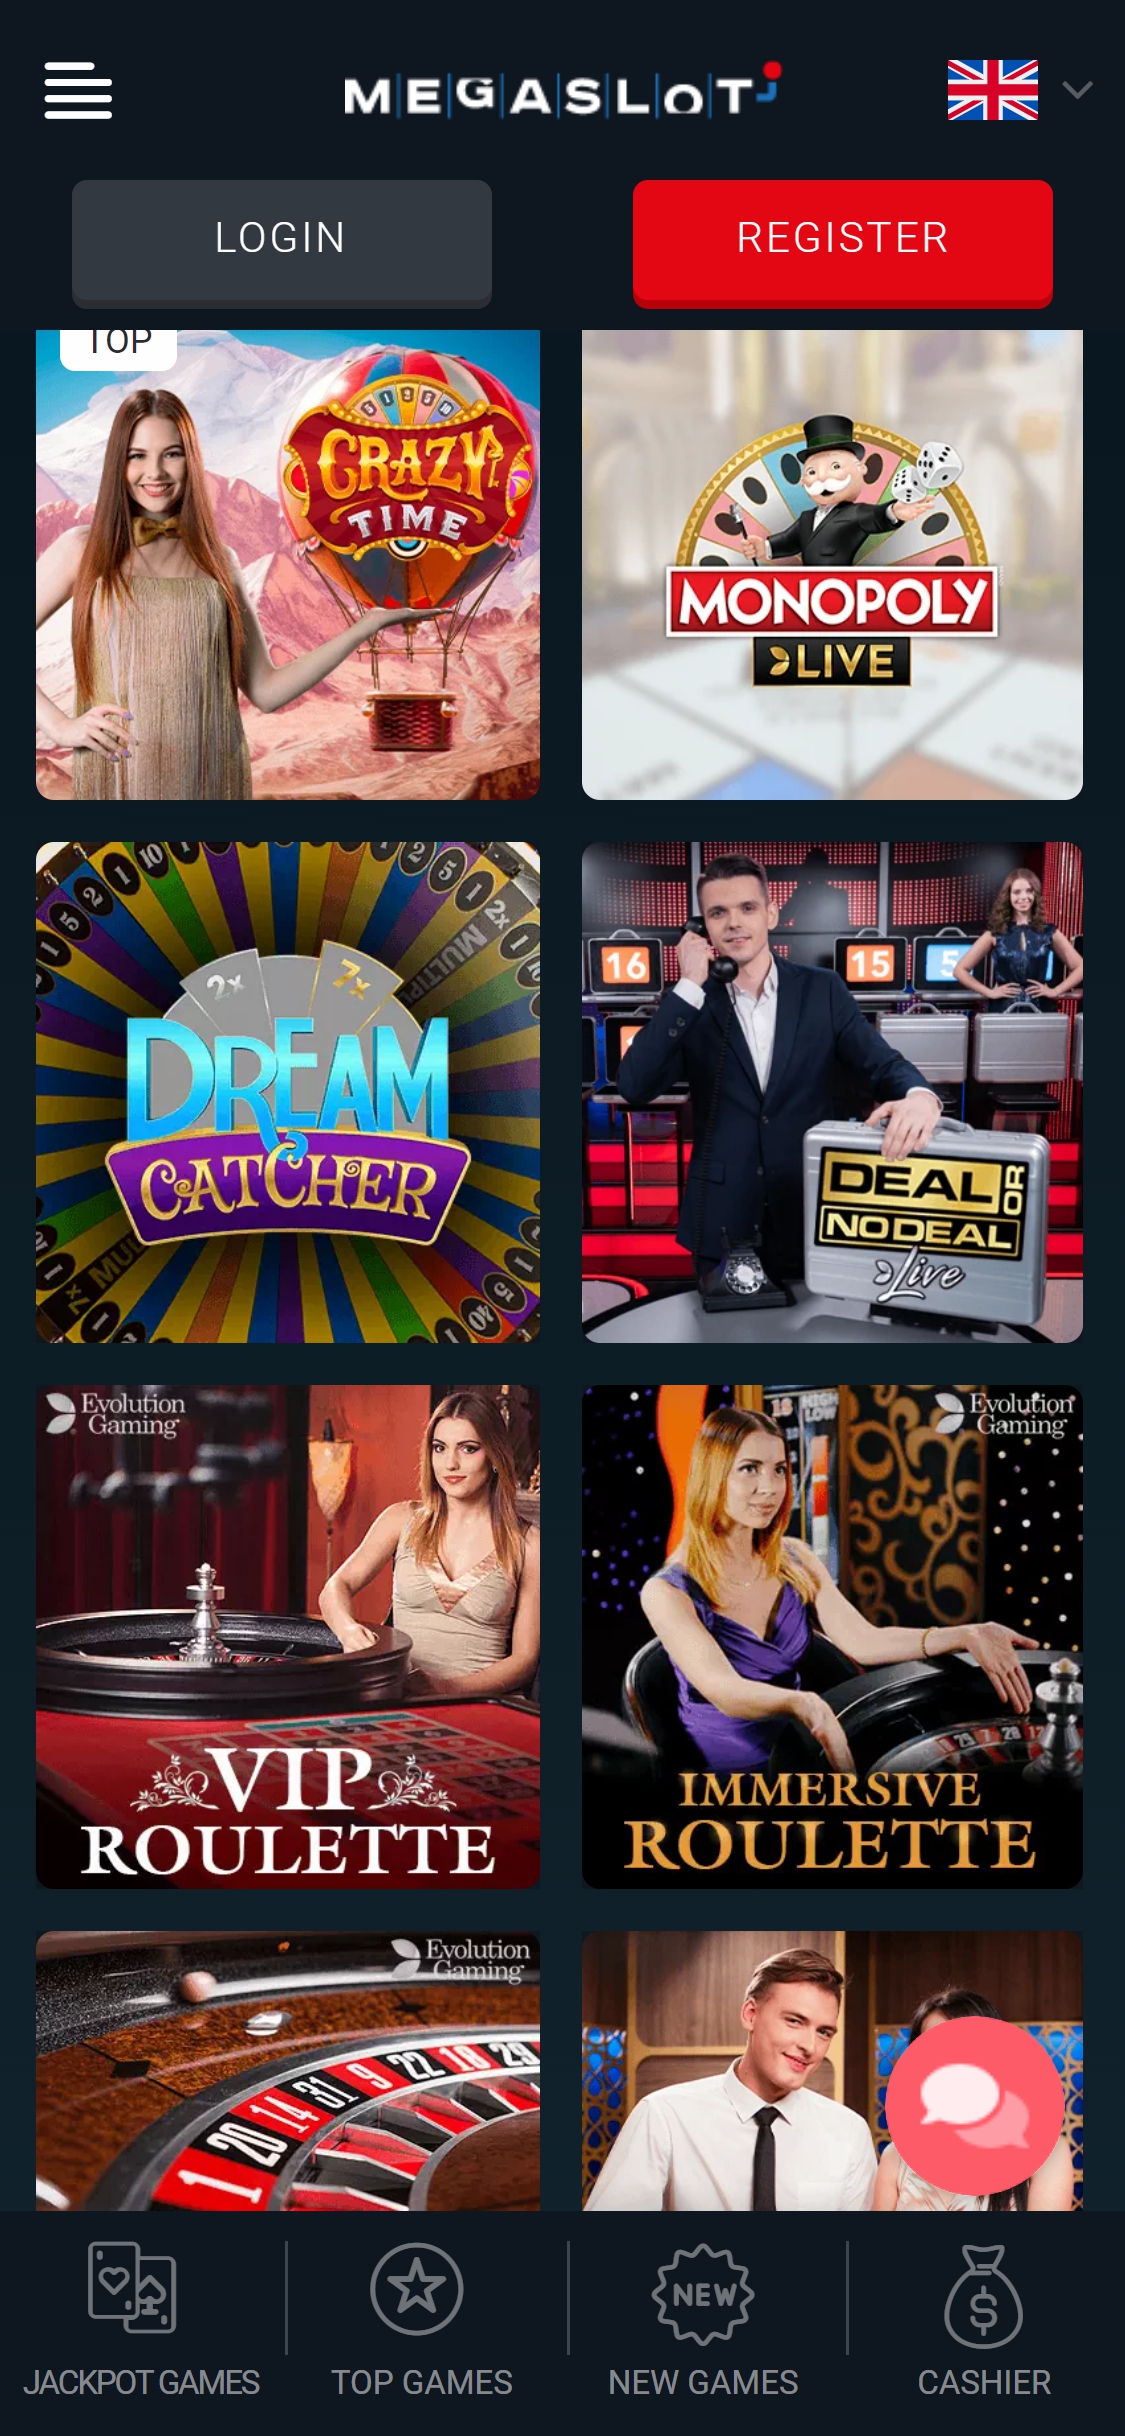 Megaslot Casino Mobile Live Dealer Games Review